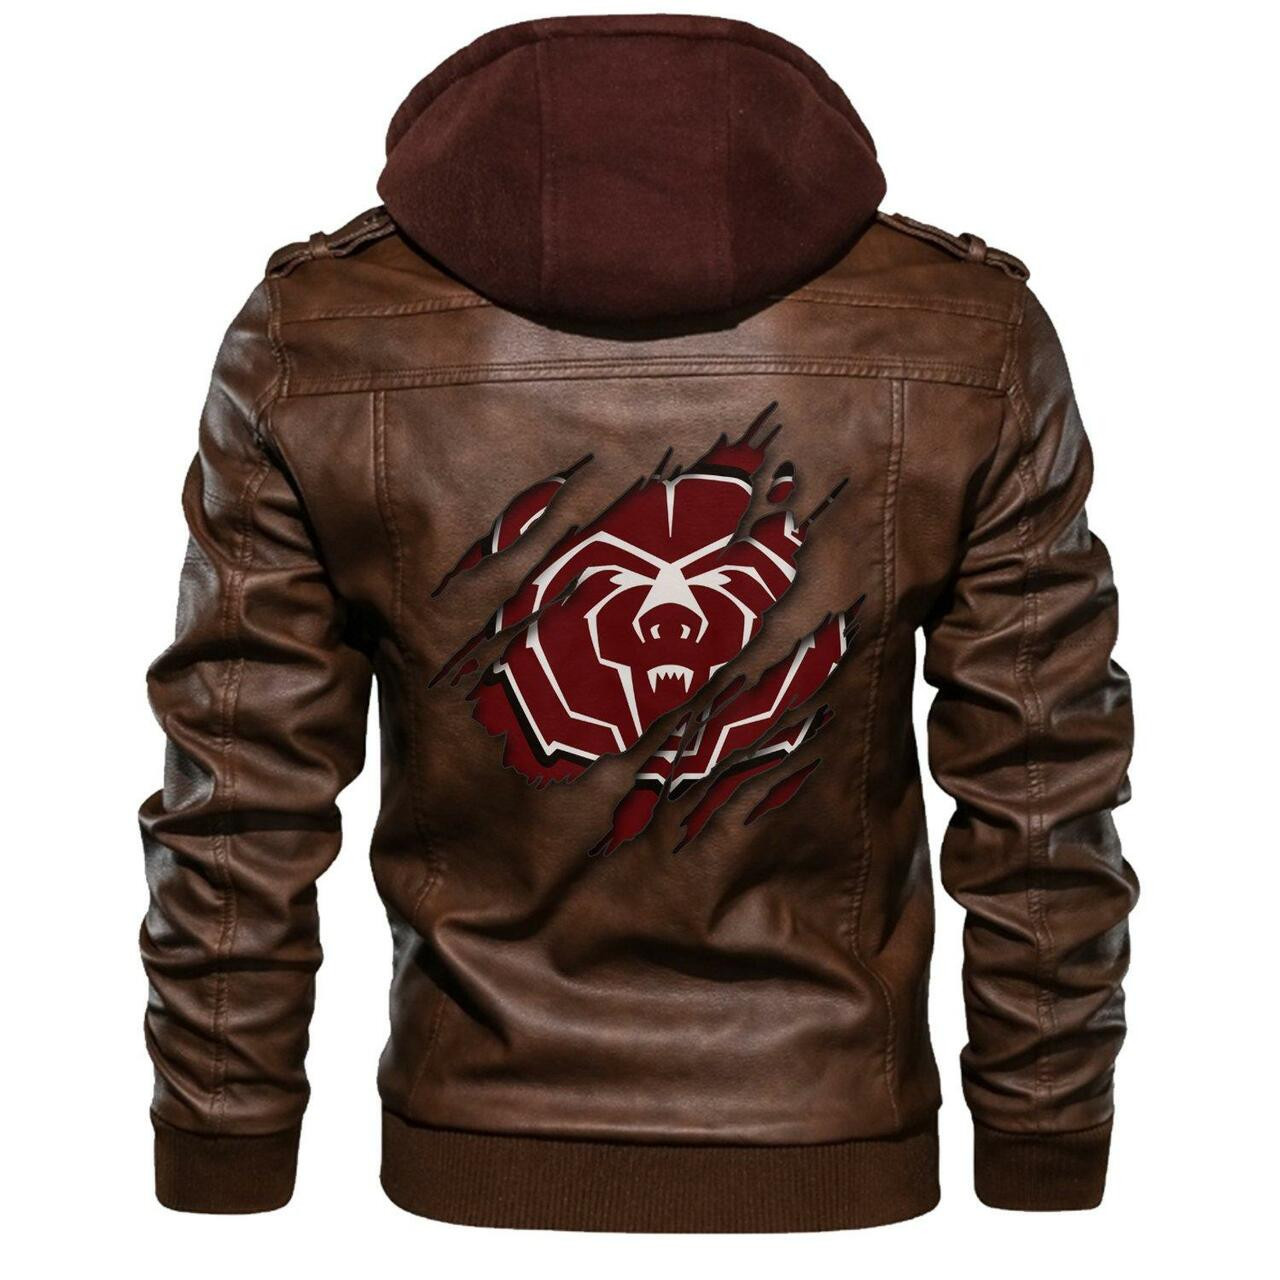 Top leather jacket Sells Best on Techcomshop 84